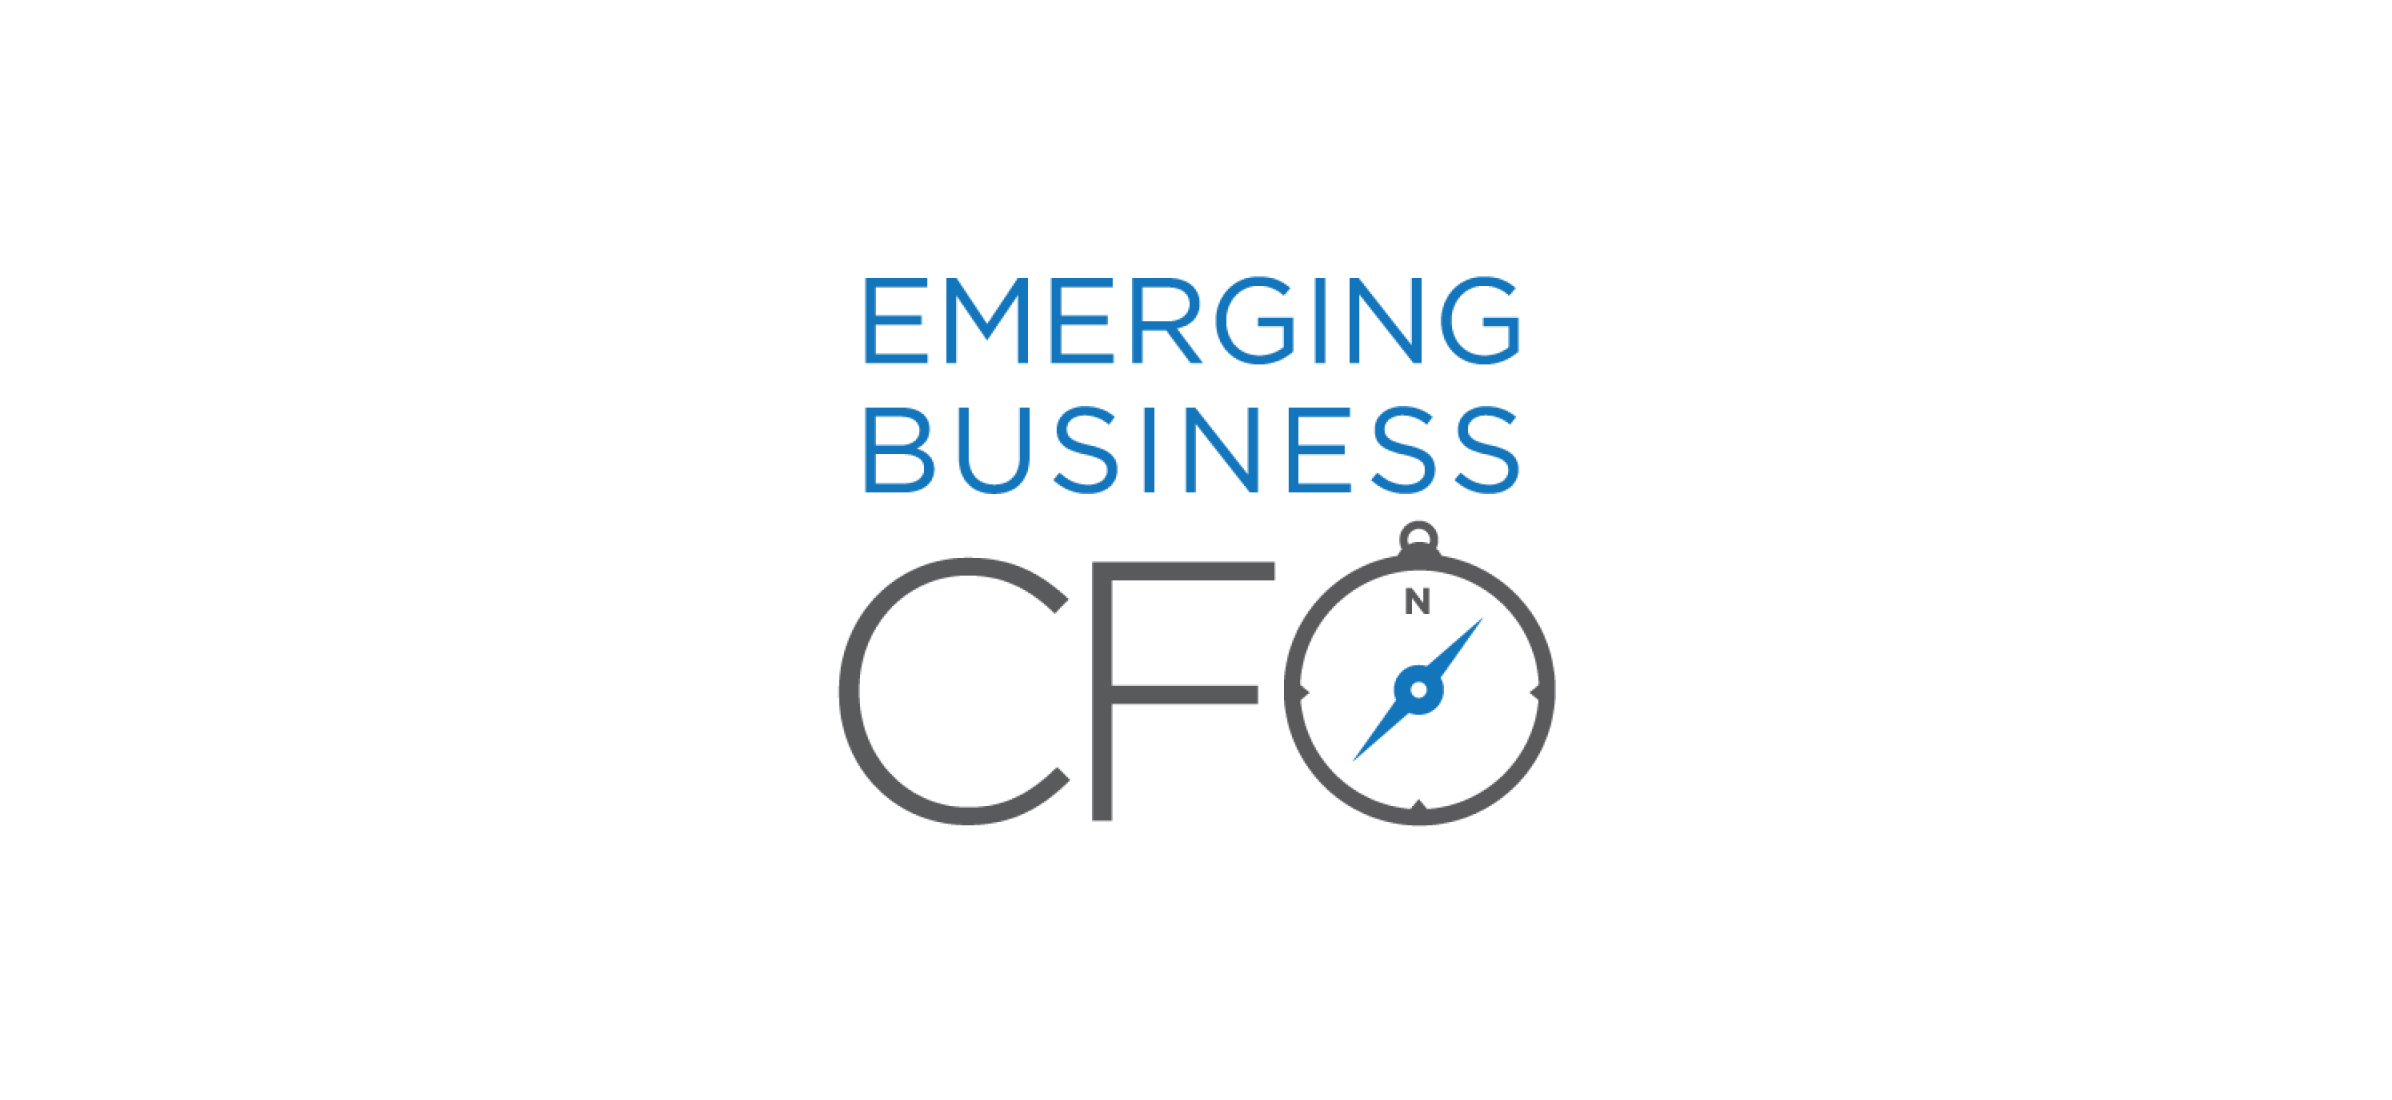 The EBCFO logo